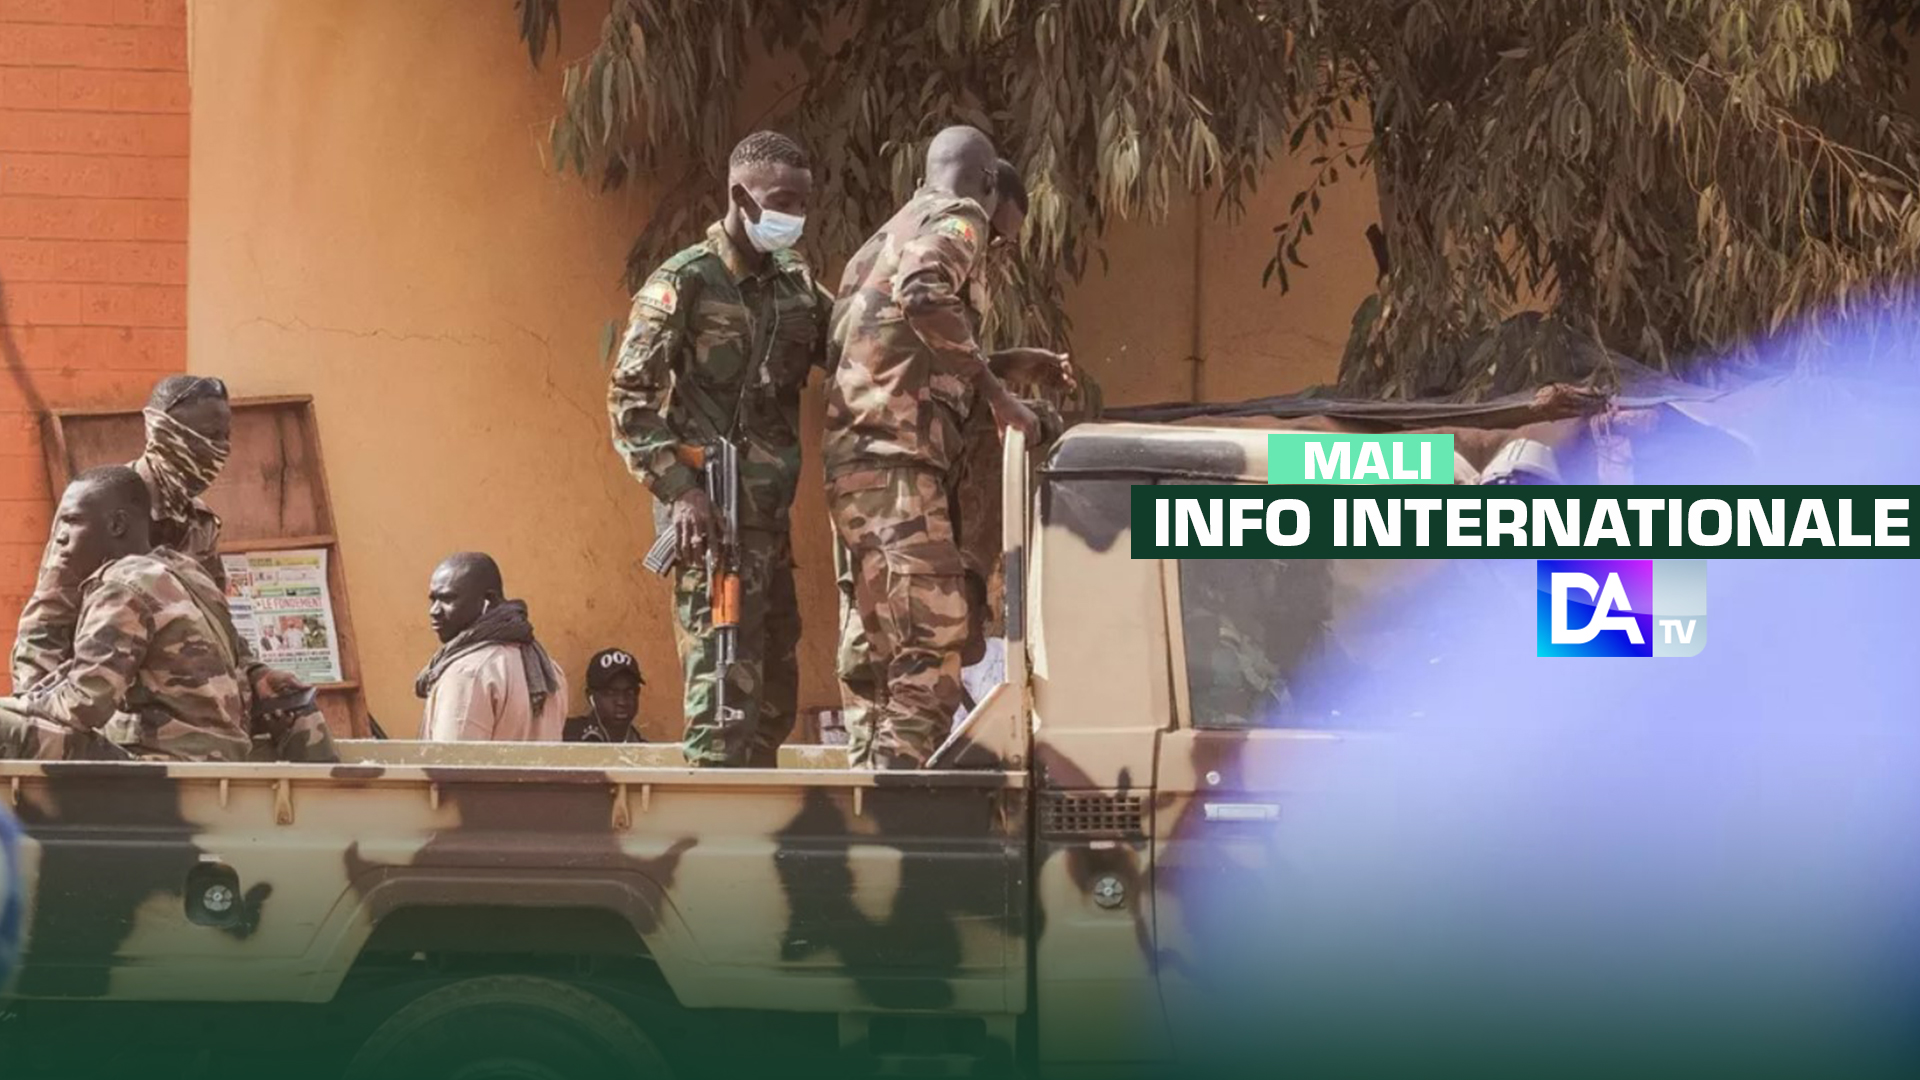 Mali: 14 soldats tués dans des combats avec Al-Qaïda qui revendique une "double embuscade"